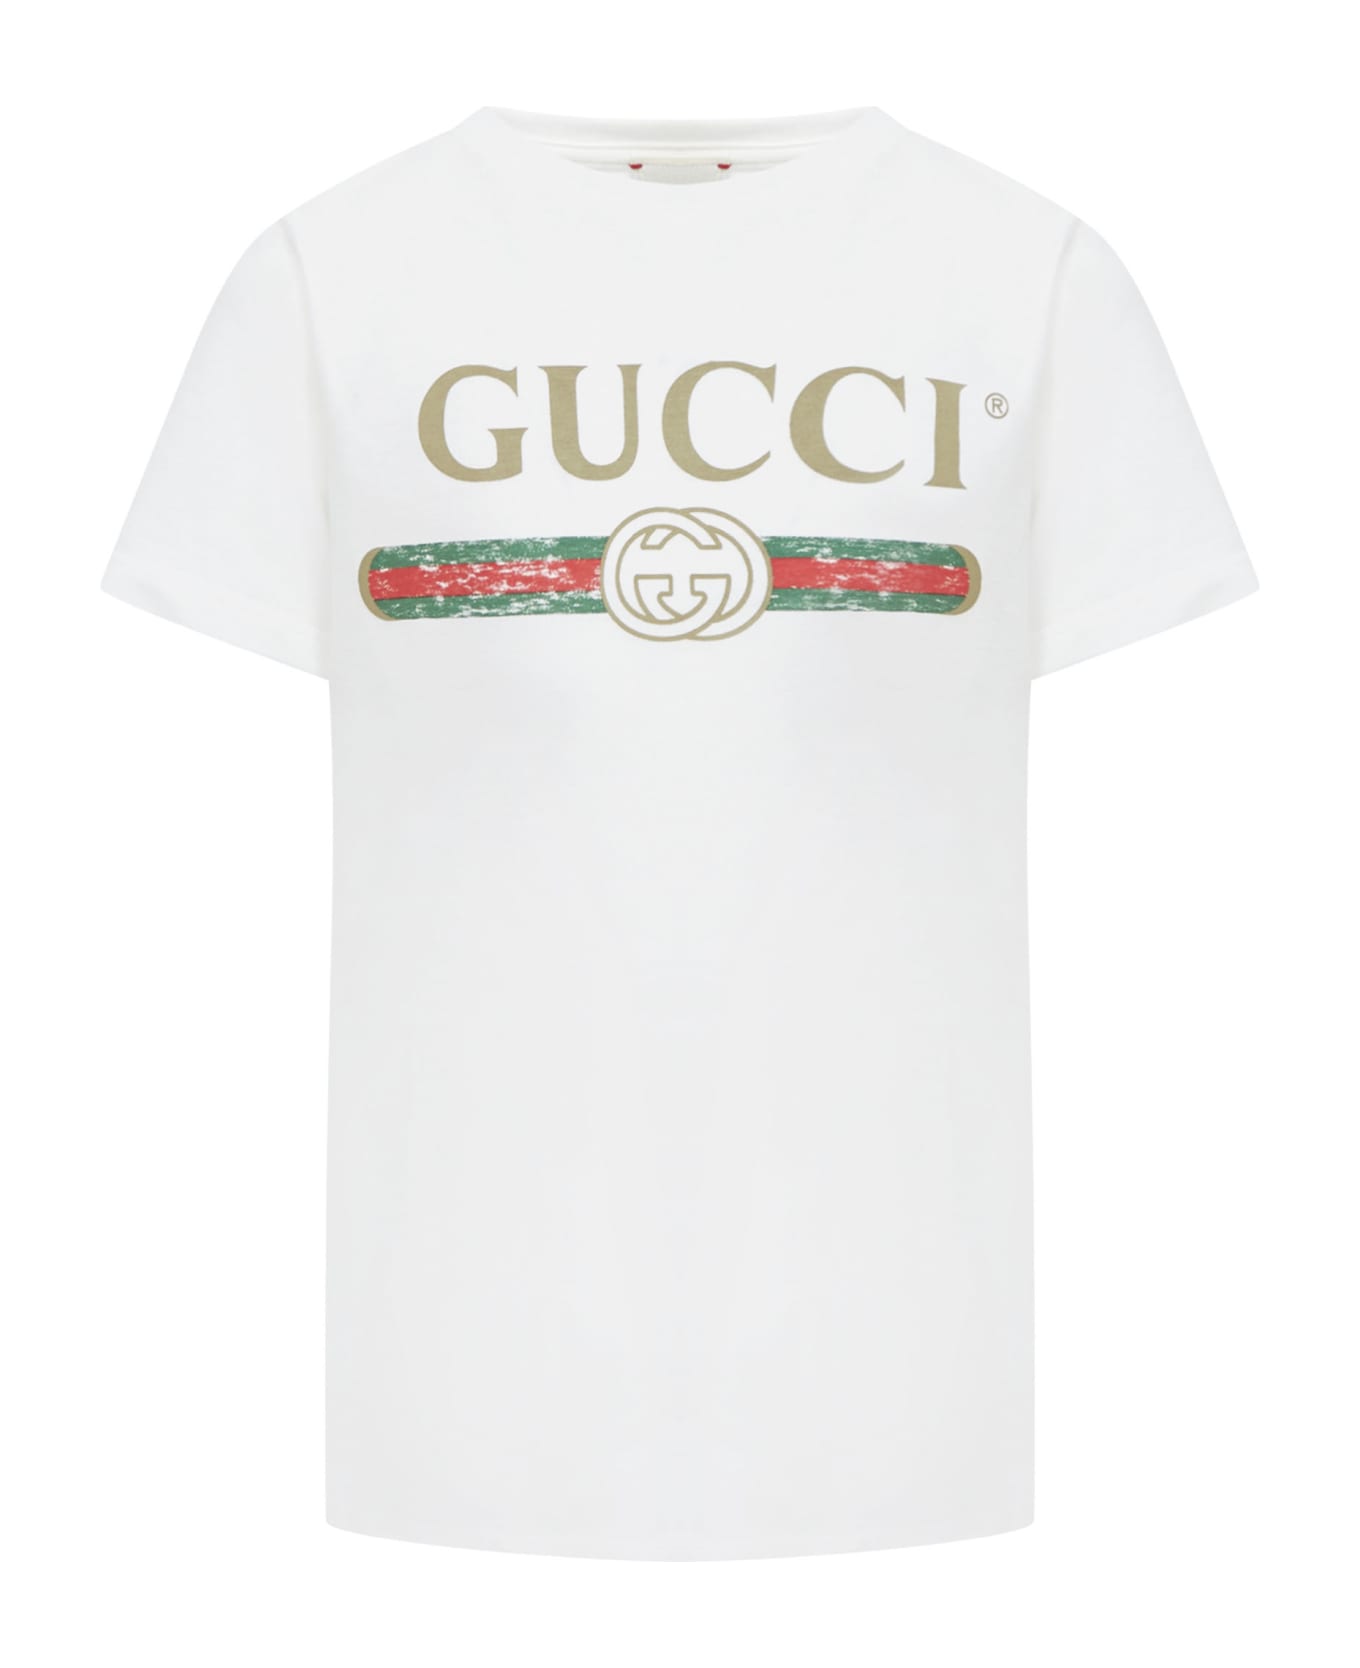 Gucci Junior Vintage Logo T-shirt - White Green Red